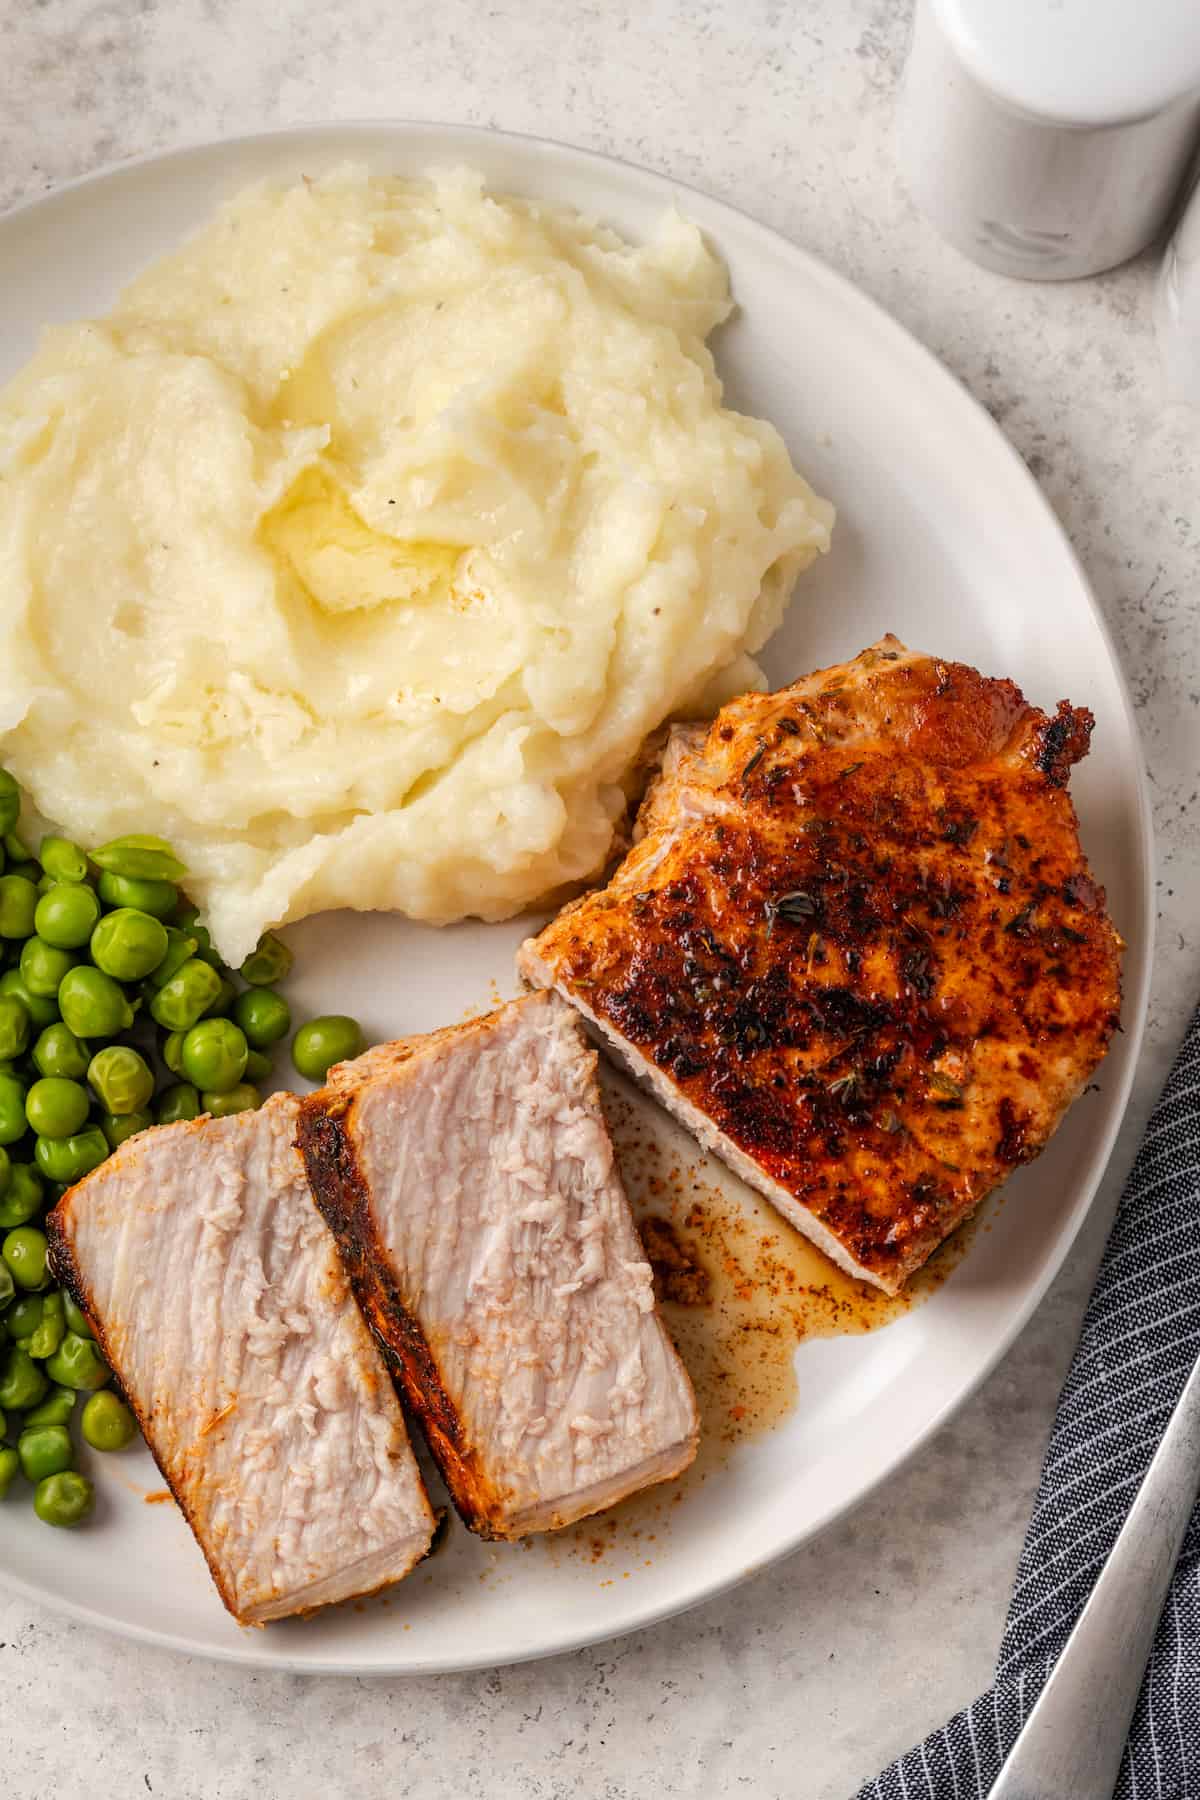 A sliced pork chop alongside buttery mashed potatoes and peas on a dinner plate.